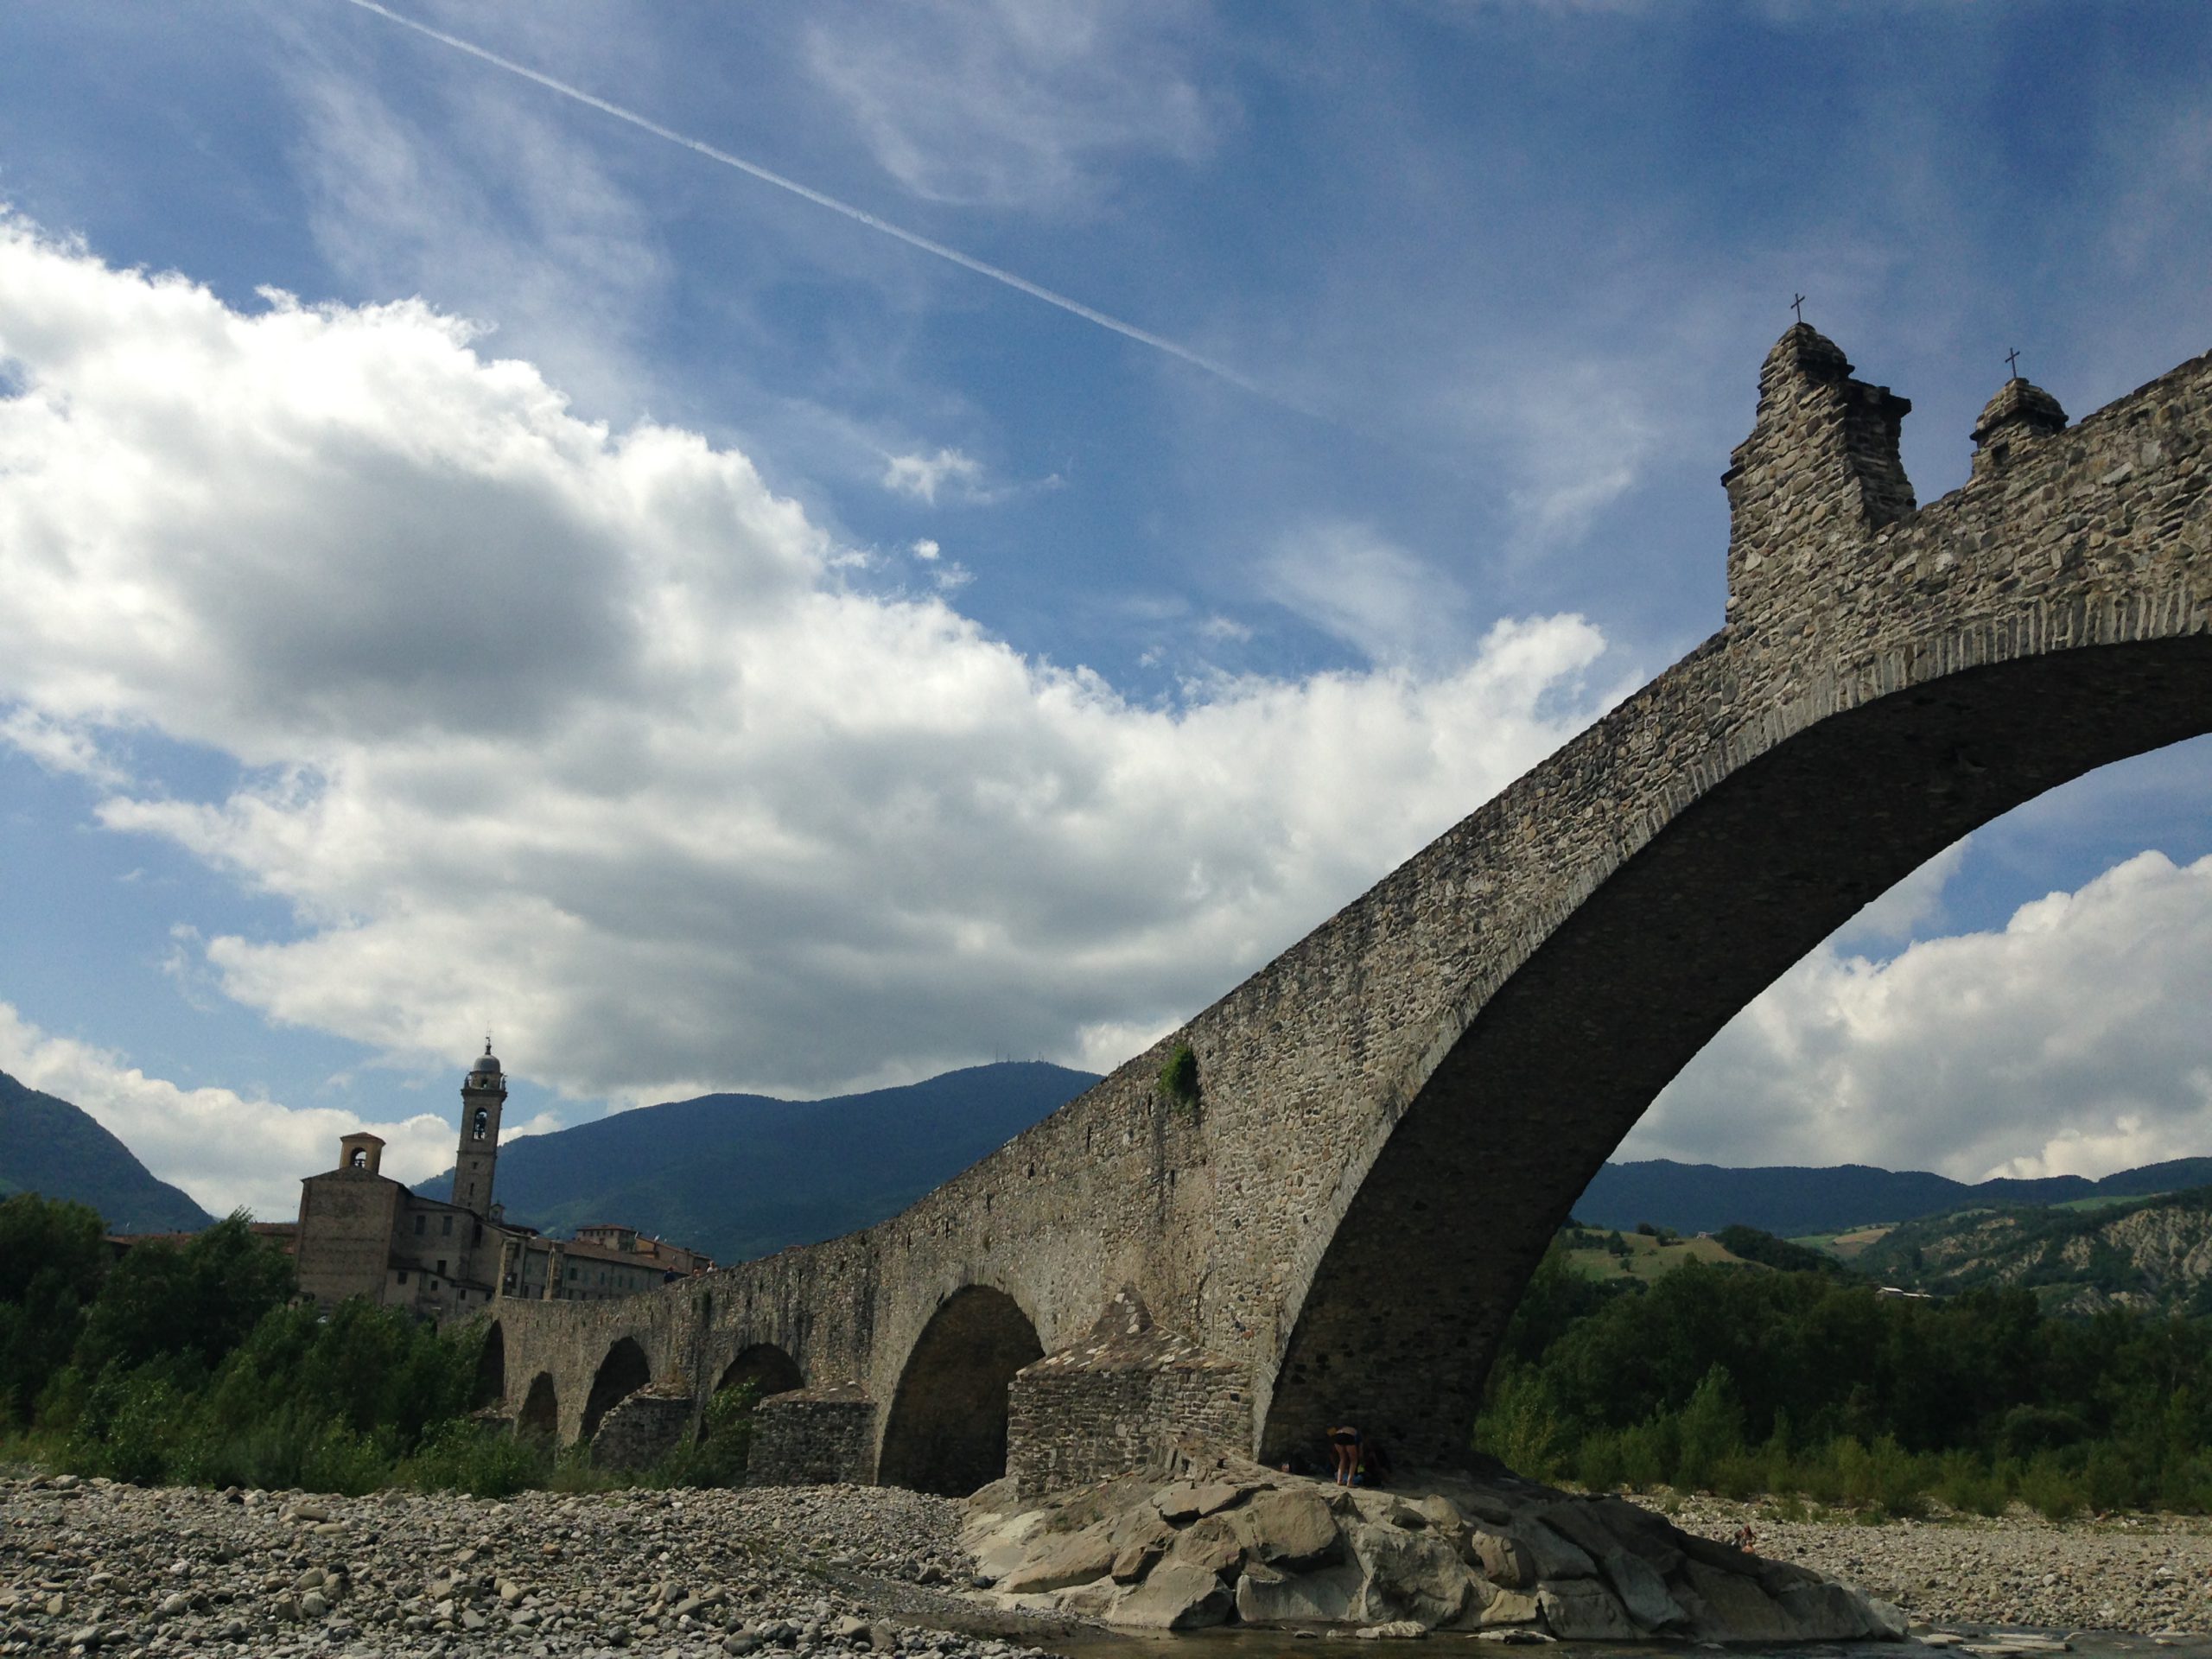 [Emilia Romagna Villages] Bobbio: a town of cinema and legend